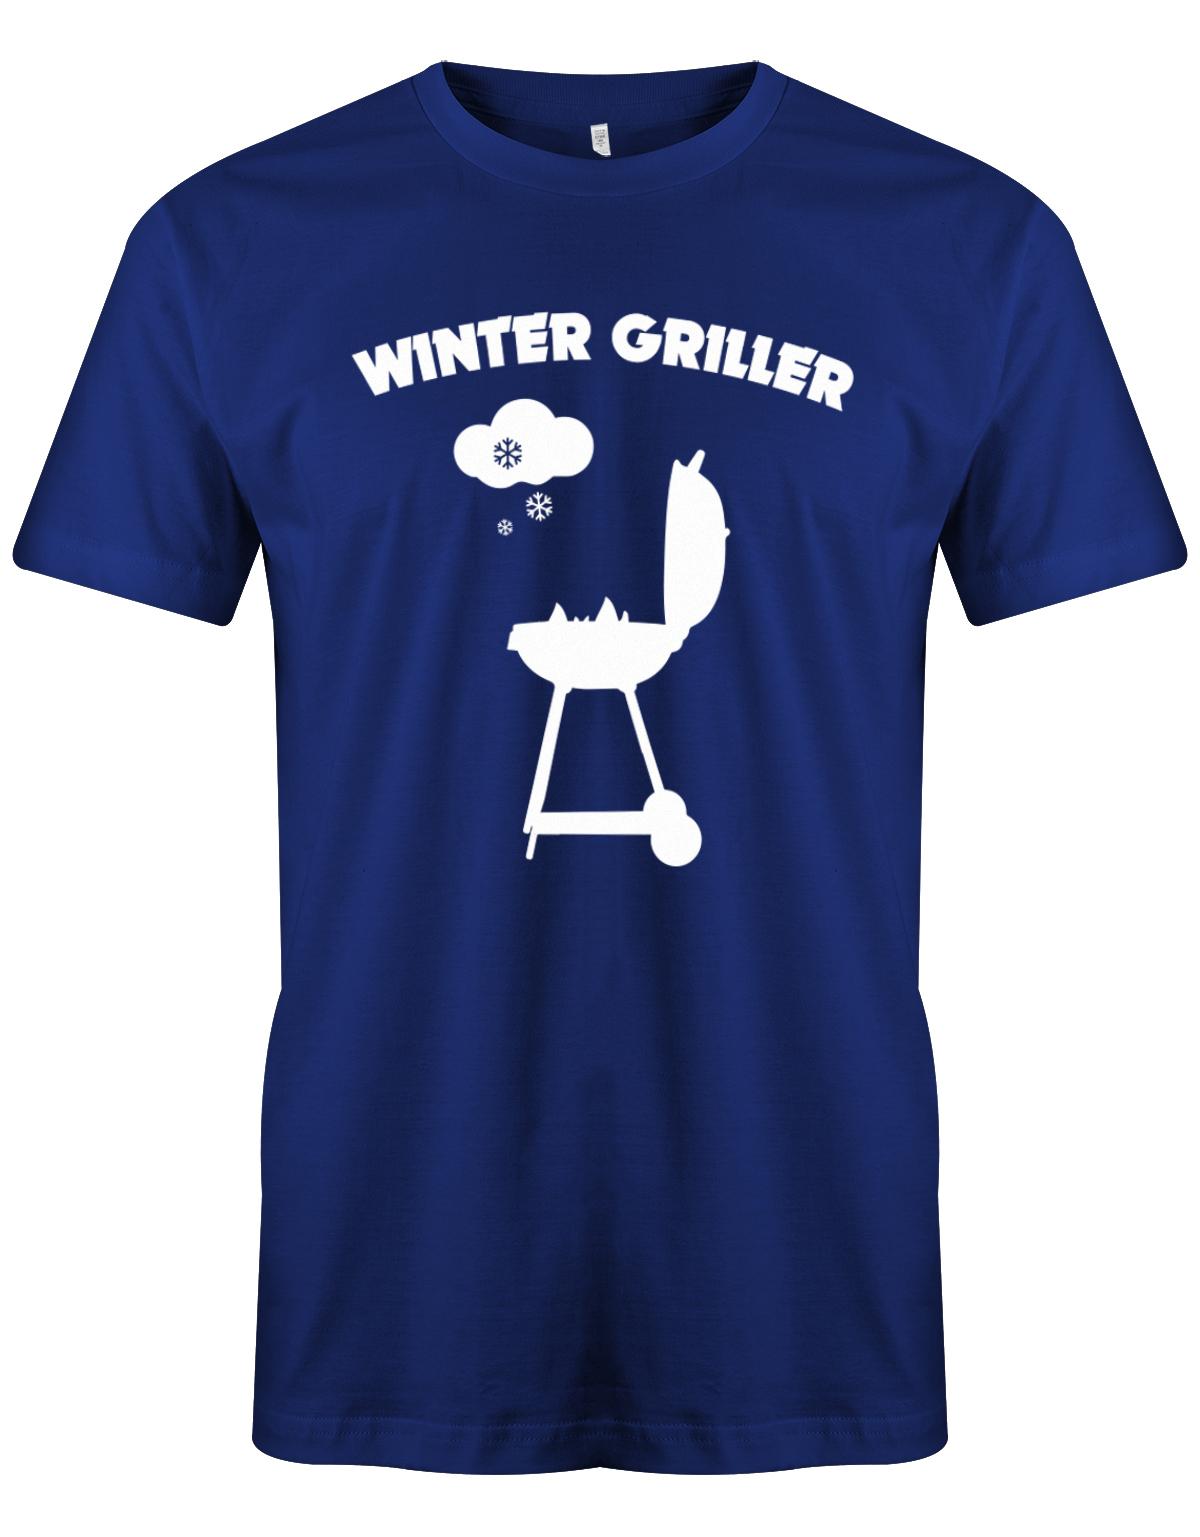 Winter-Griller-Schnee-Herren-Grill-Shirt-Royalblau